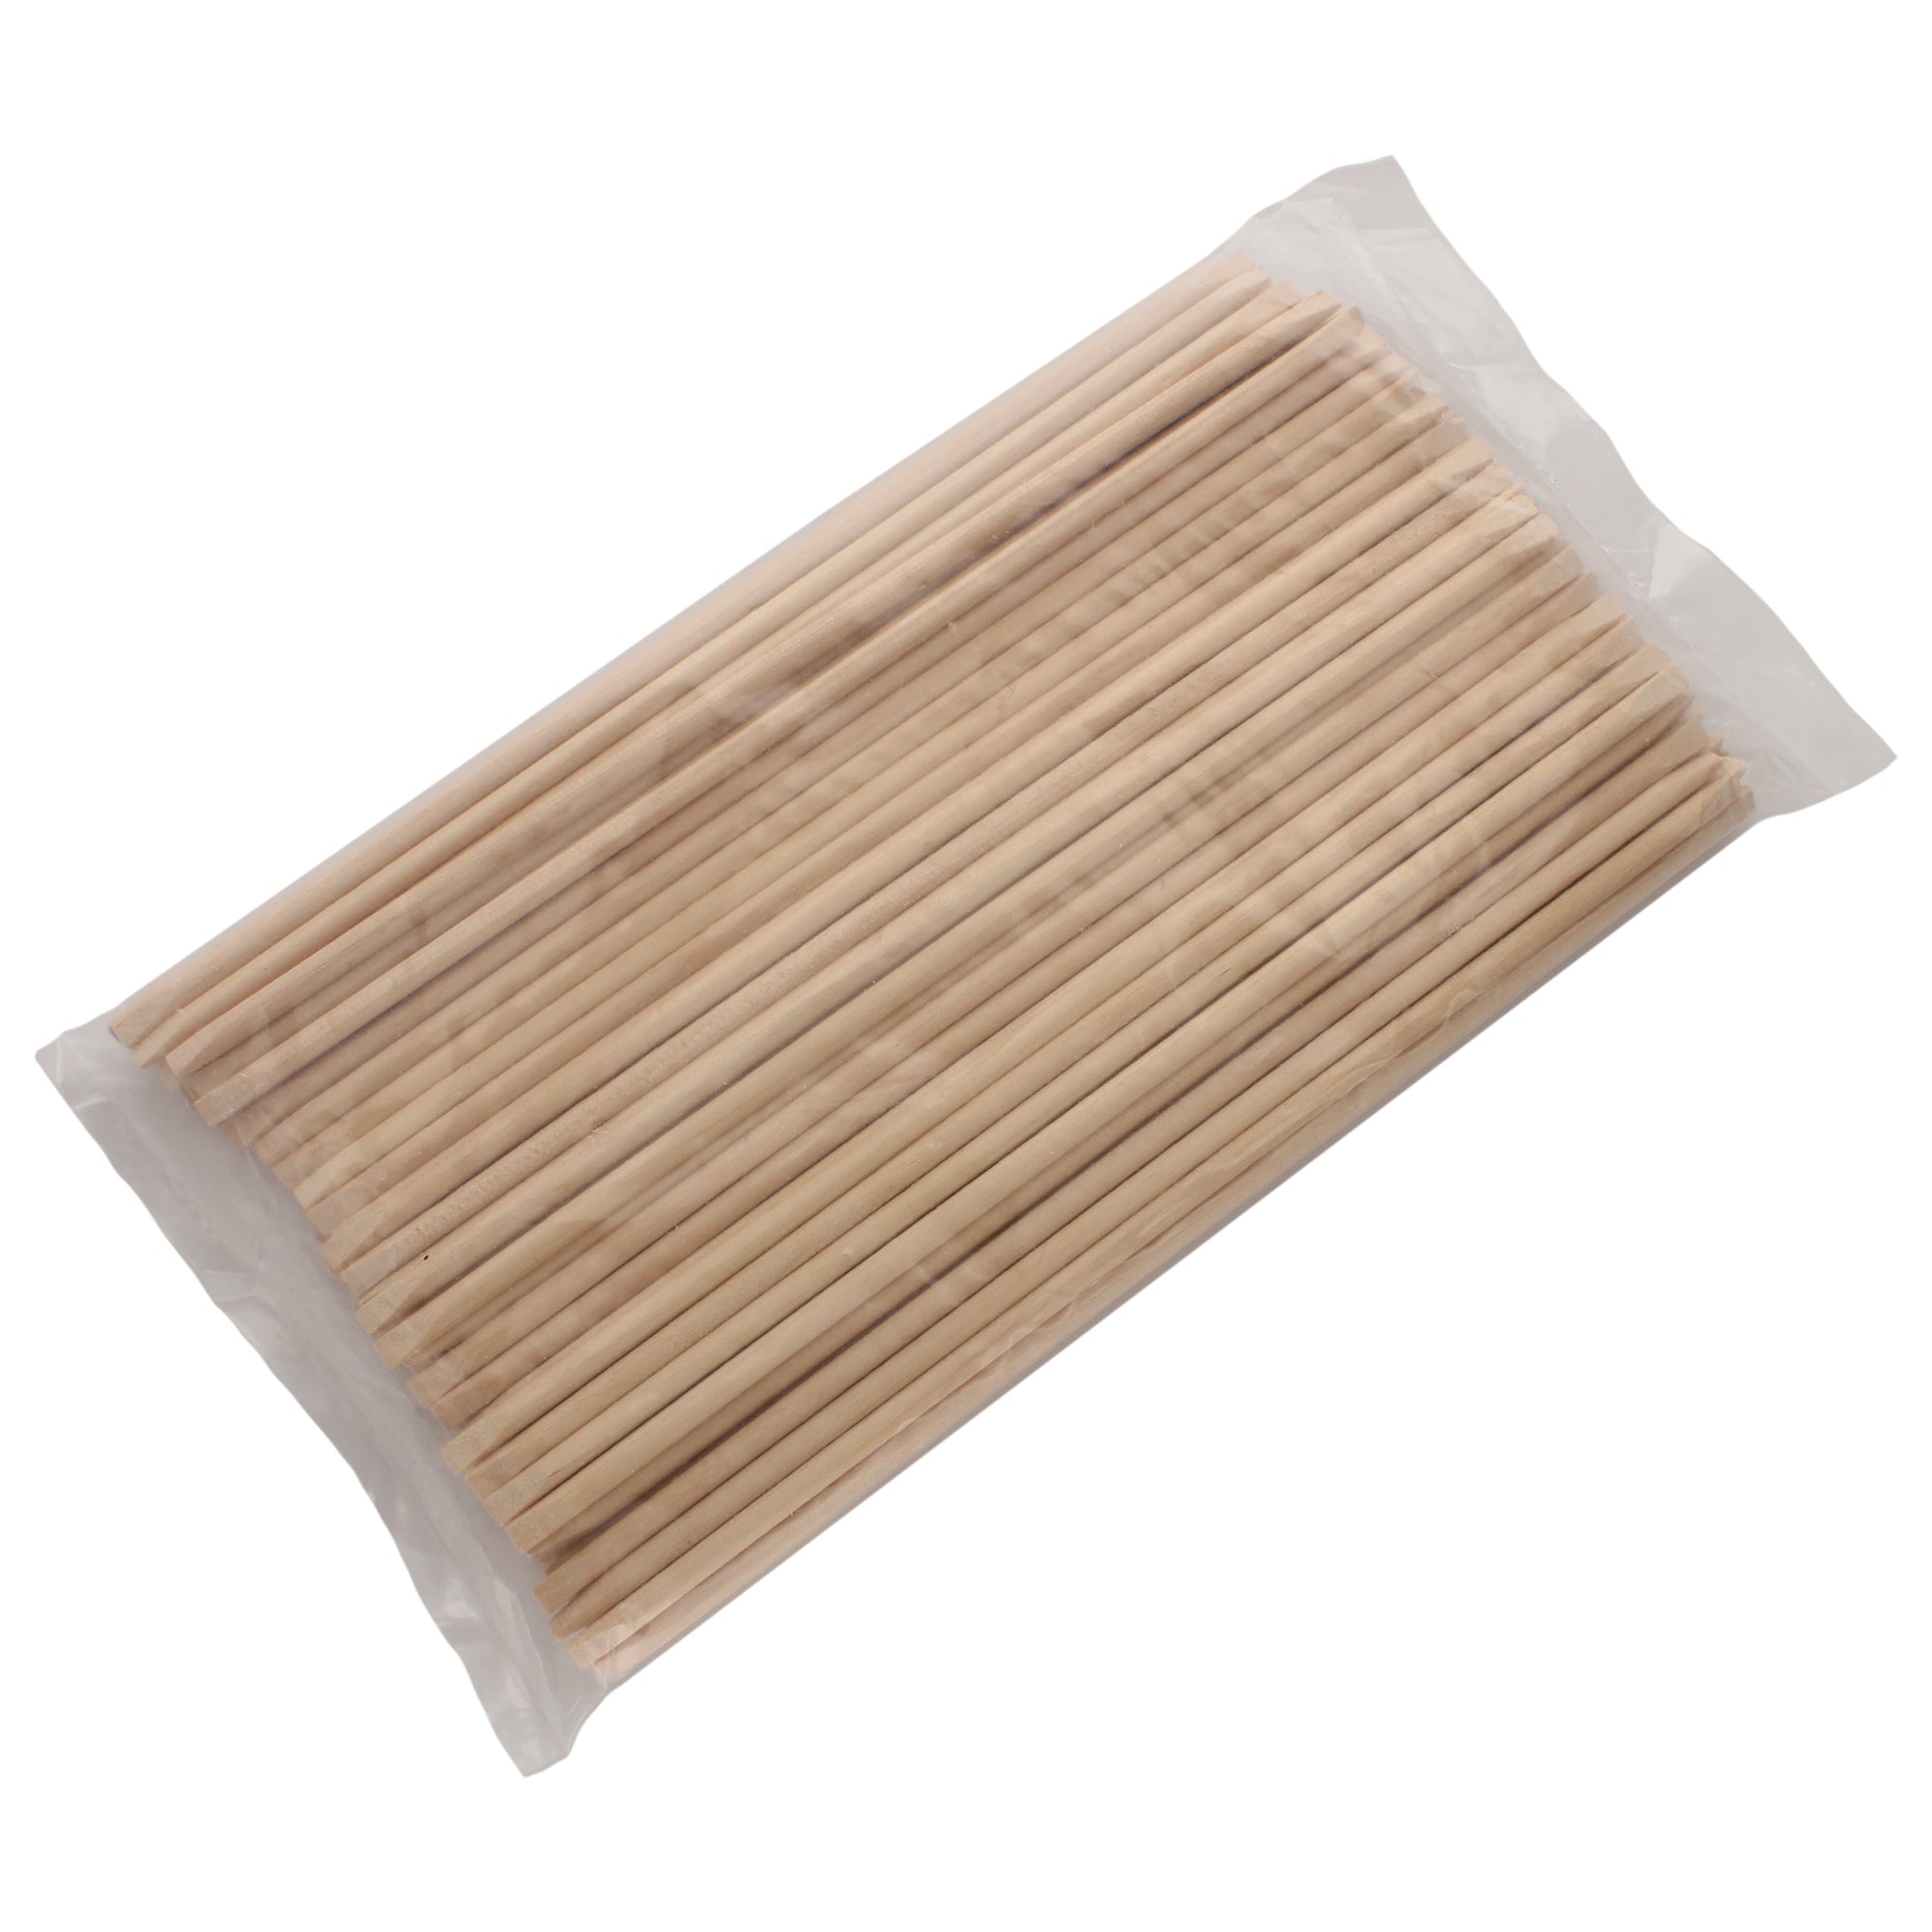 Wooden Mixing Sticks (Bag of 100)